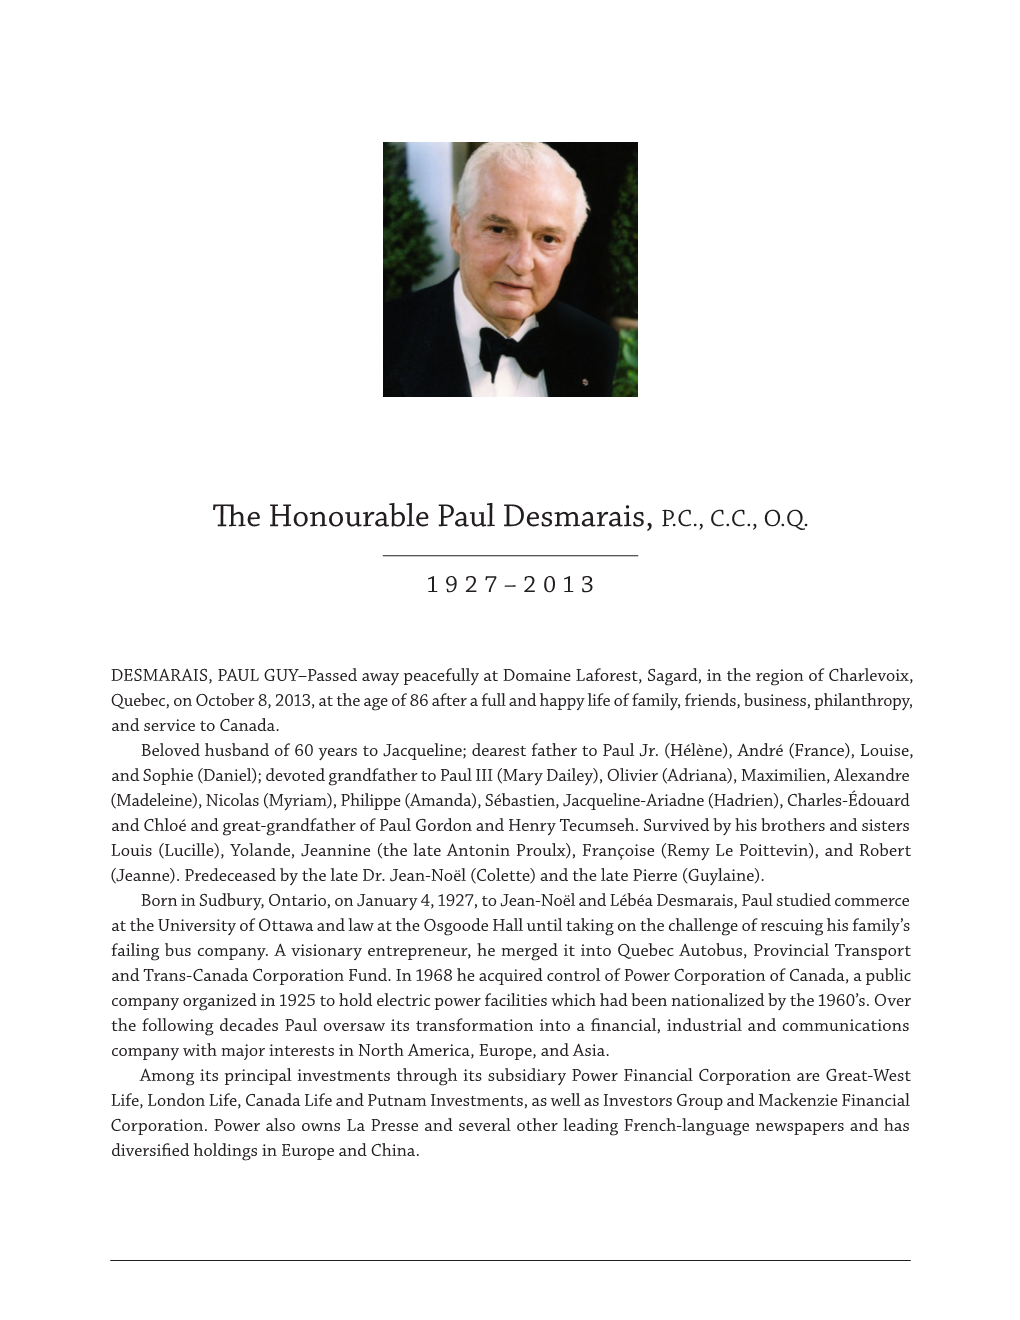 E Honourable Paul Desmarais, P.C., C.C., O.Q. Life, His Irrepressible Sense of Fun, and His Unpretentious Nature